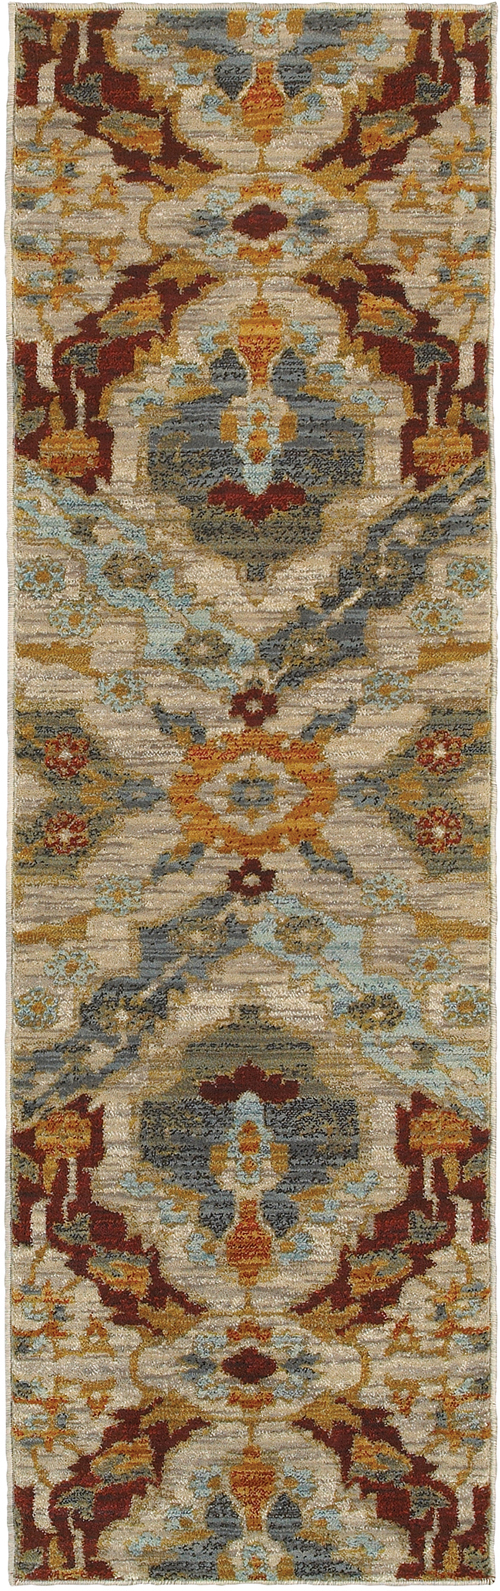 Oriental Weavers SEDONA 6357A Beige Rug